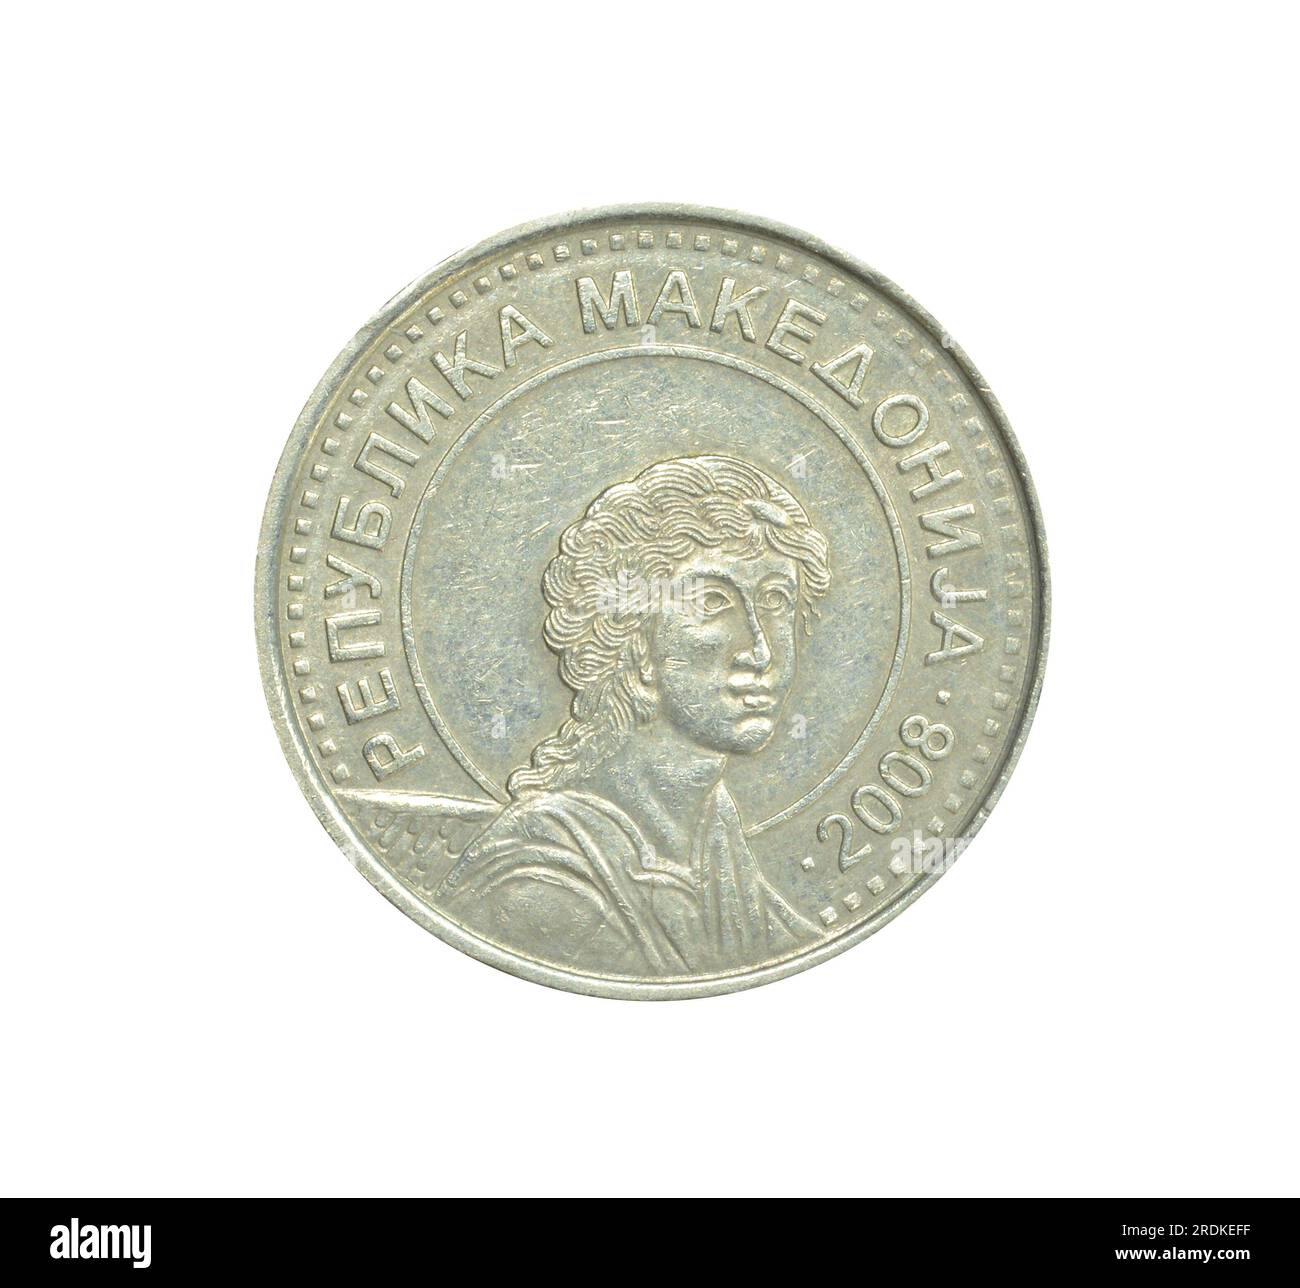 Obverse of 50 Macedonian Denars coin made by North Macedonia, that ...